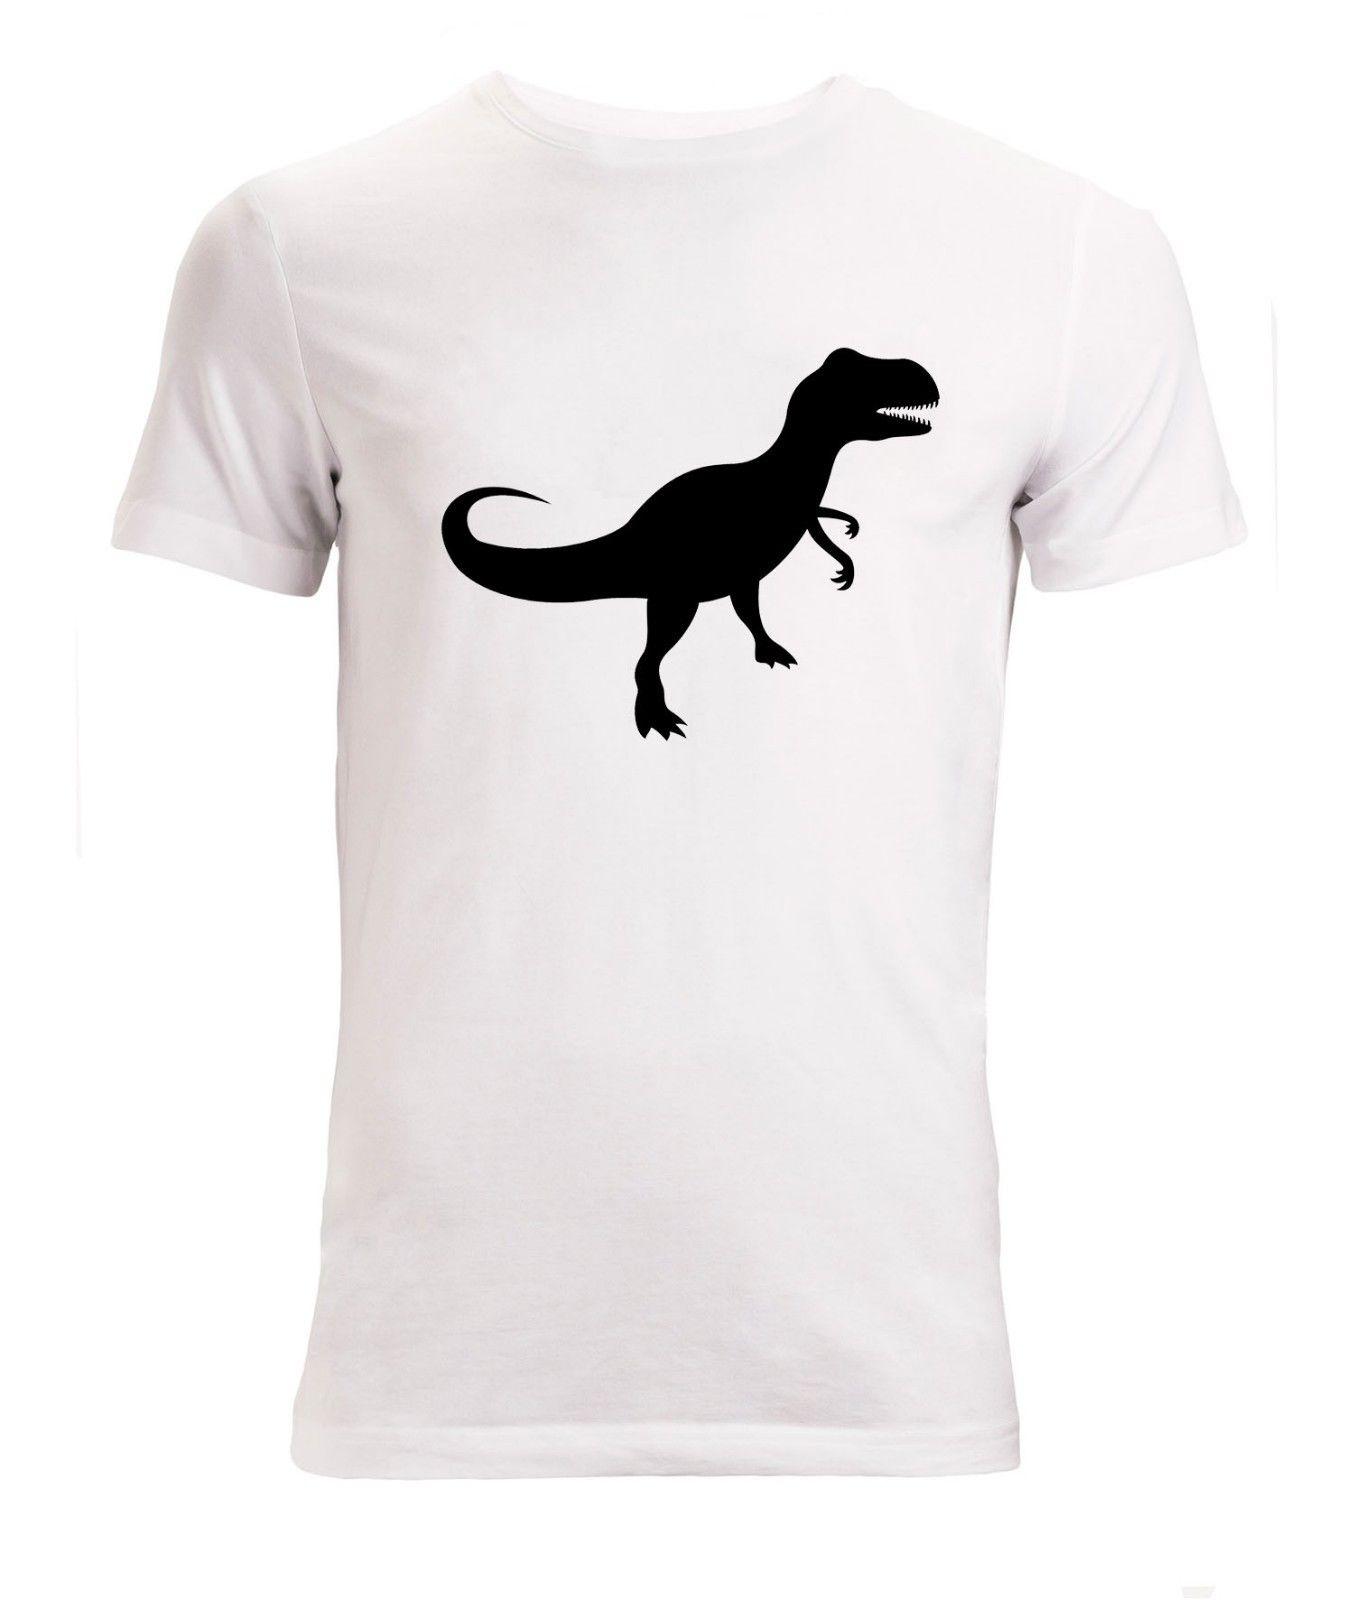 T-Rex Logo - Dinosaur T Rex Graphic Logo Artwork Men S (woman S Available) T Shirt White Men Women Unisex Fashion Tshirt Free Shipping